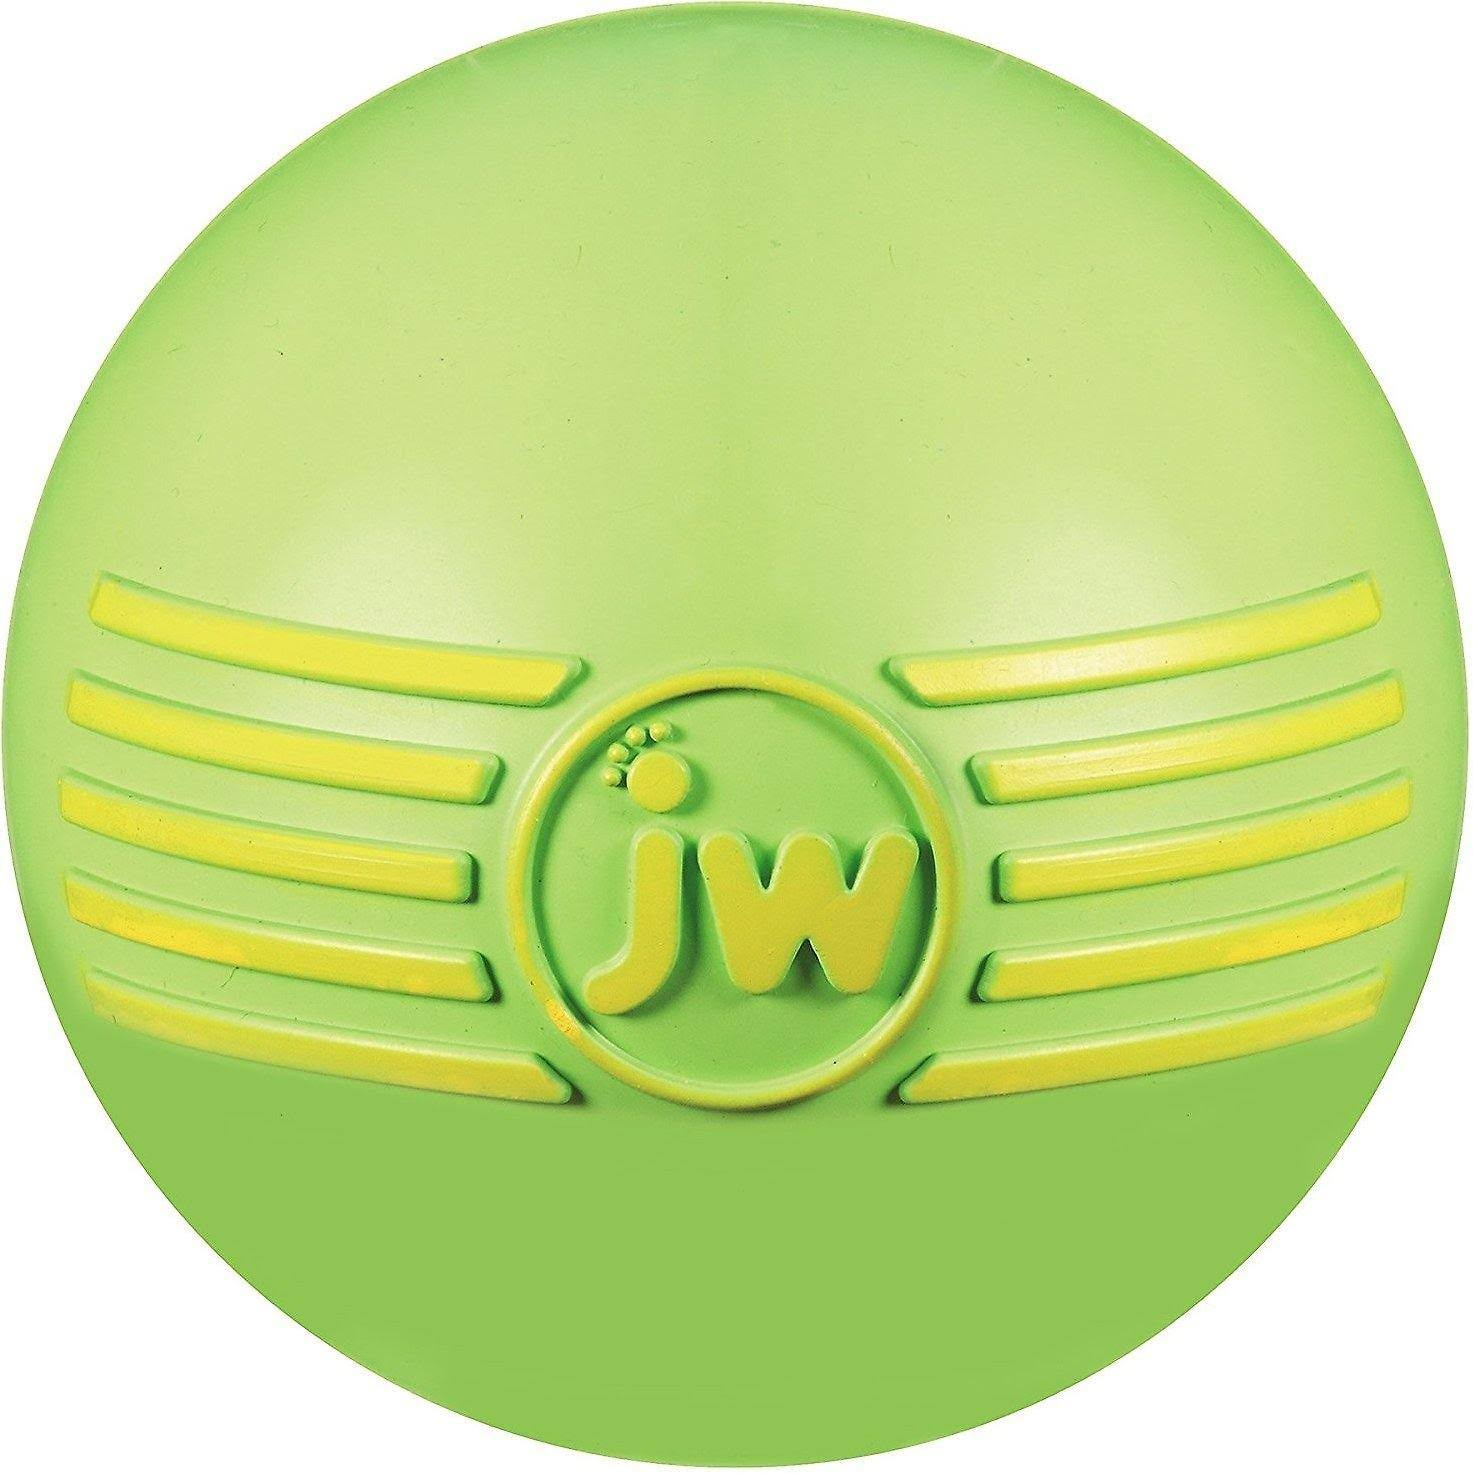 Jw Pet Company Isqueak Ball Rubber Dog Toy - Medium